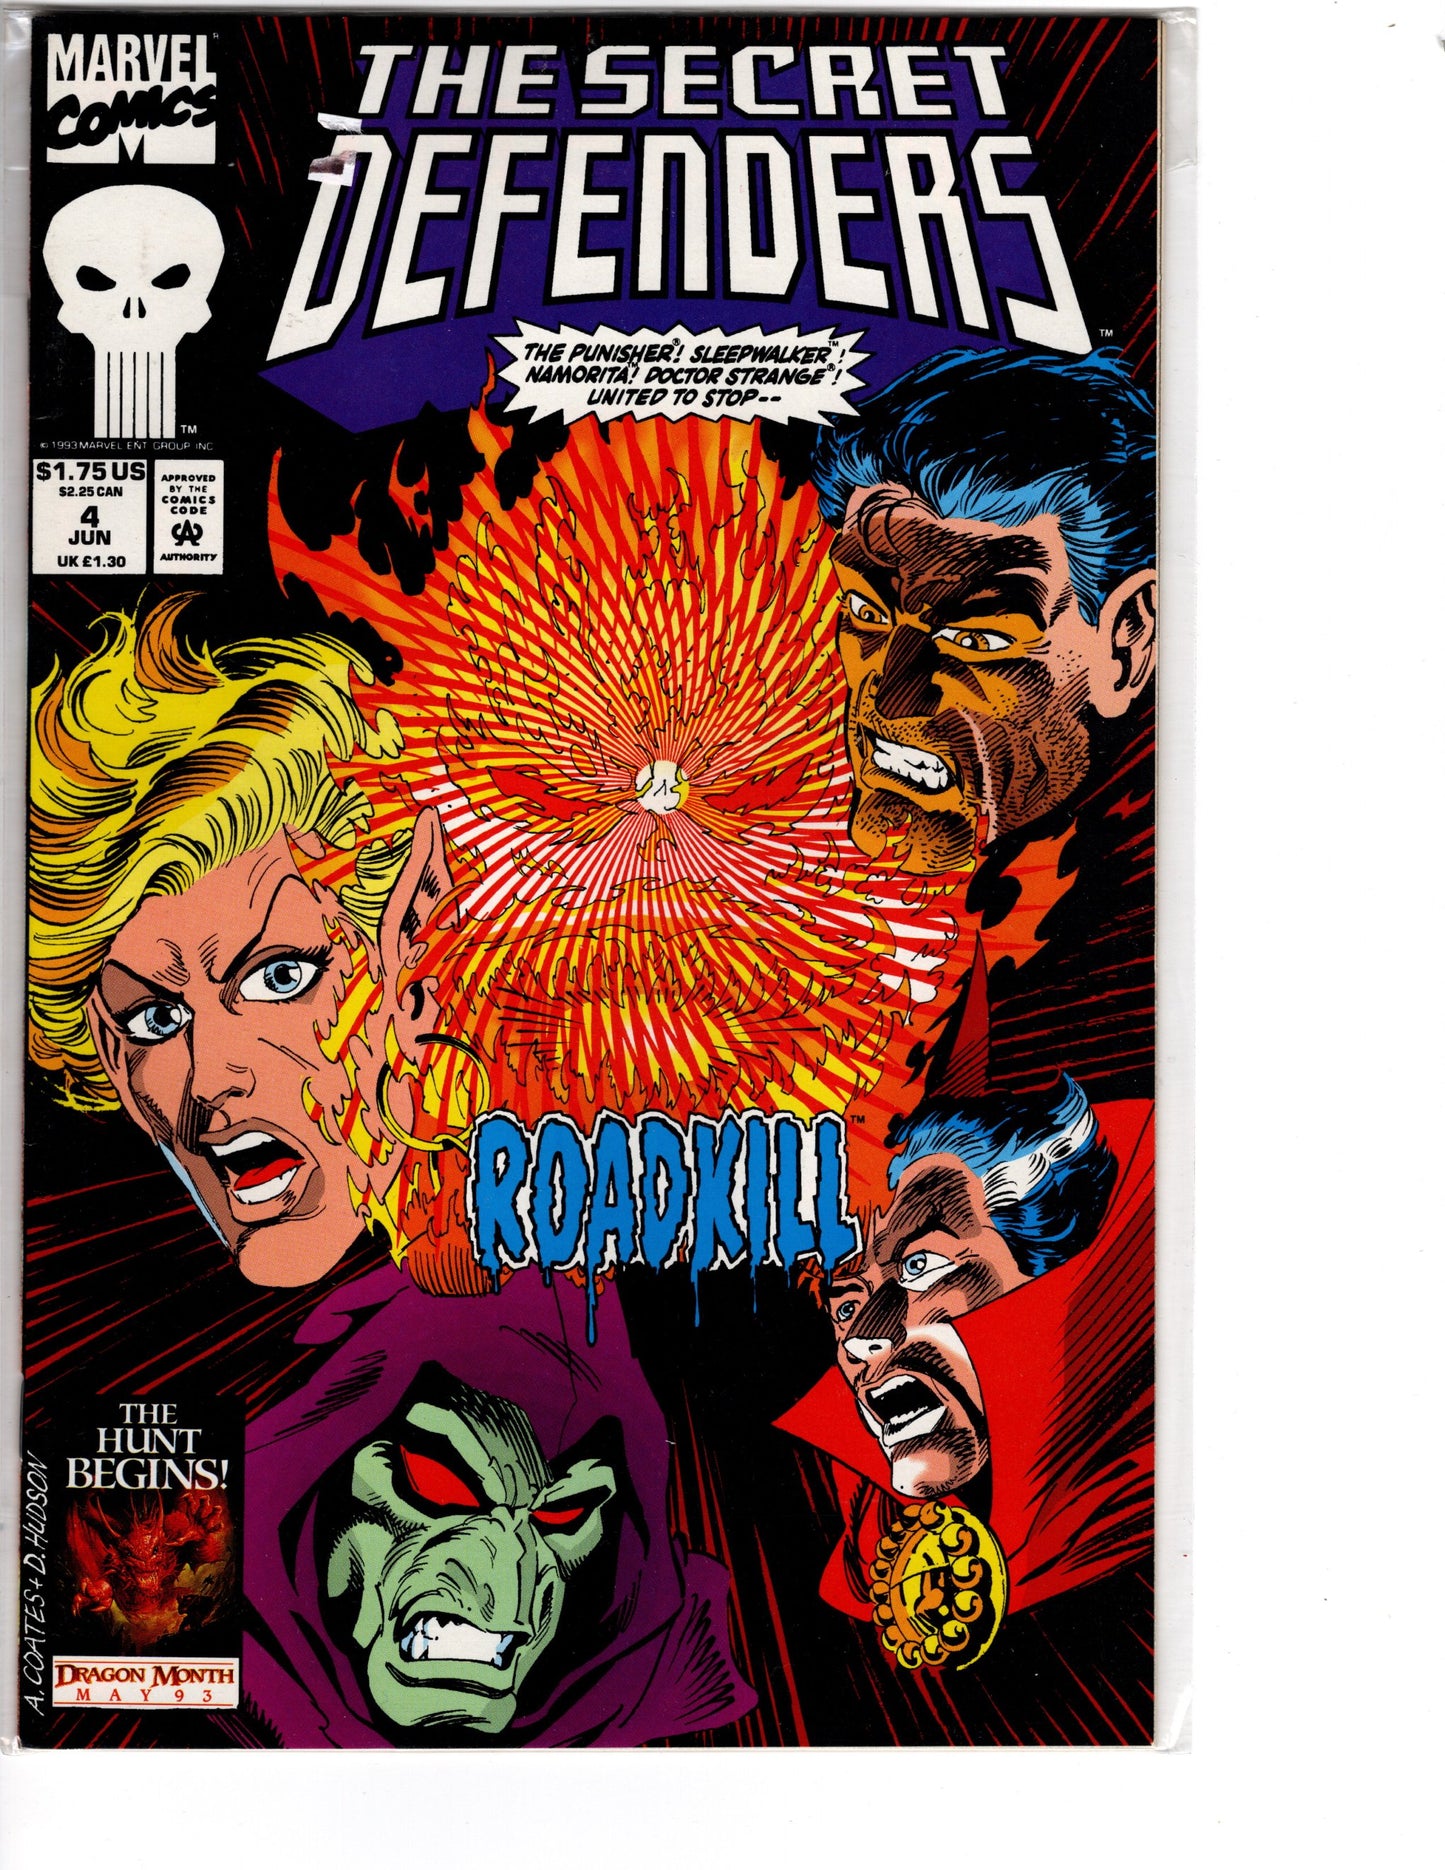 The Secret Defenders #4